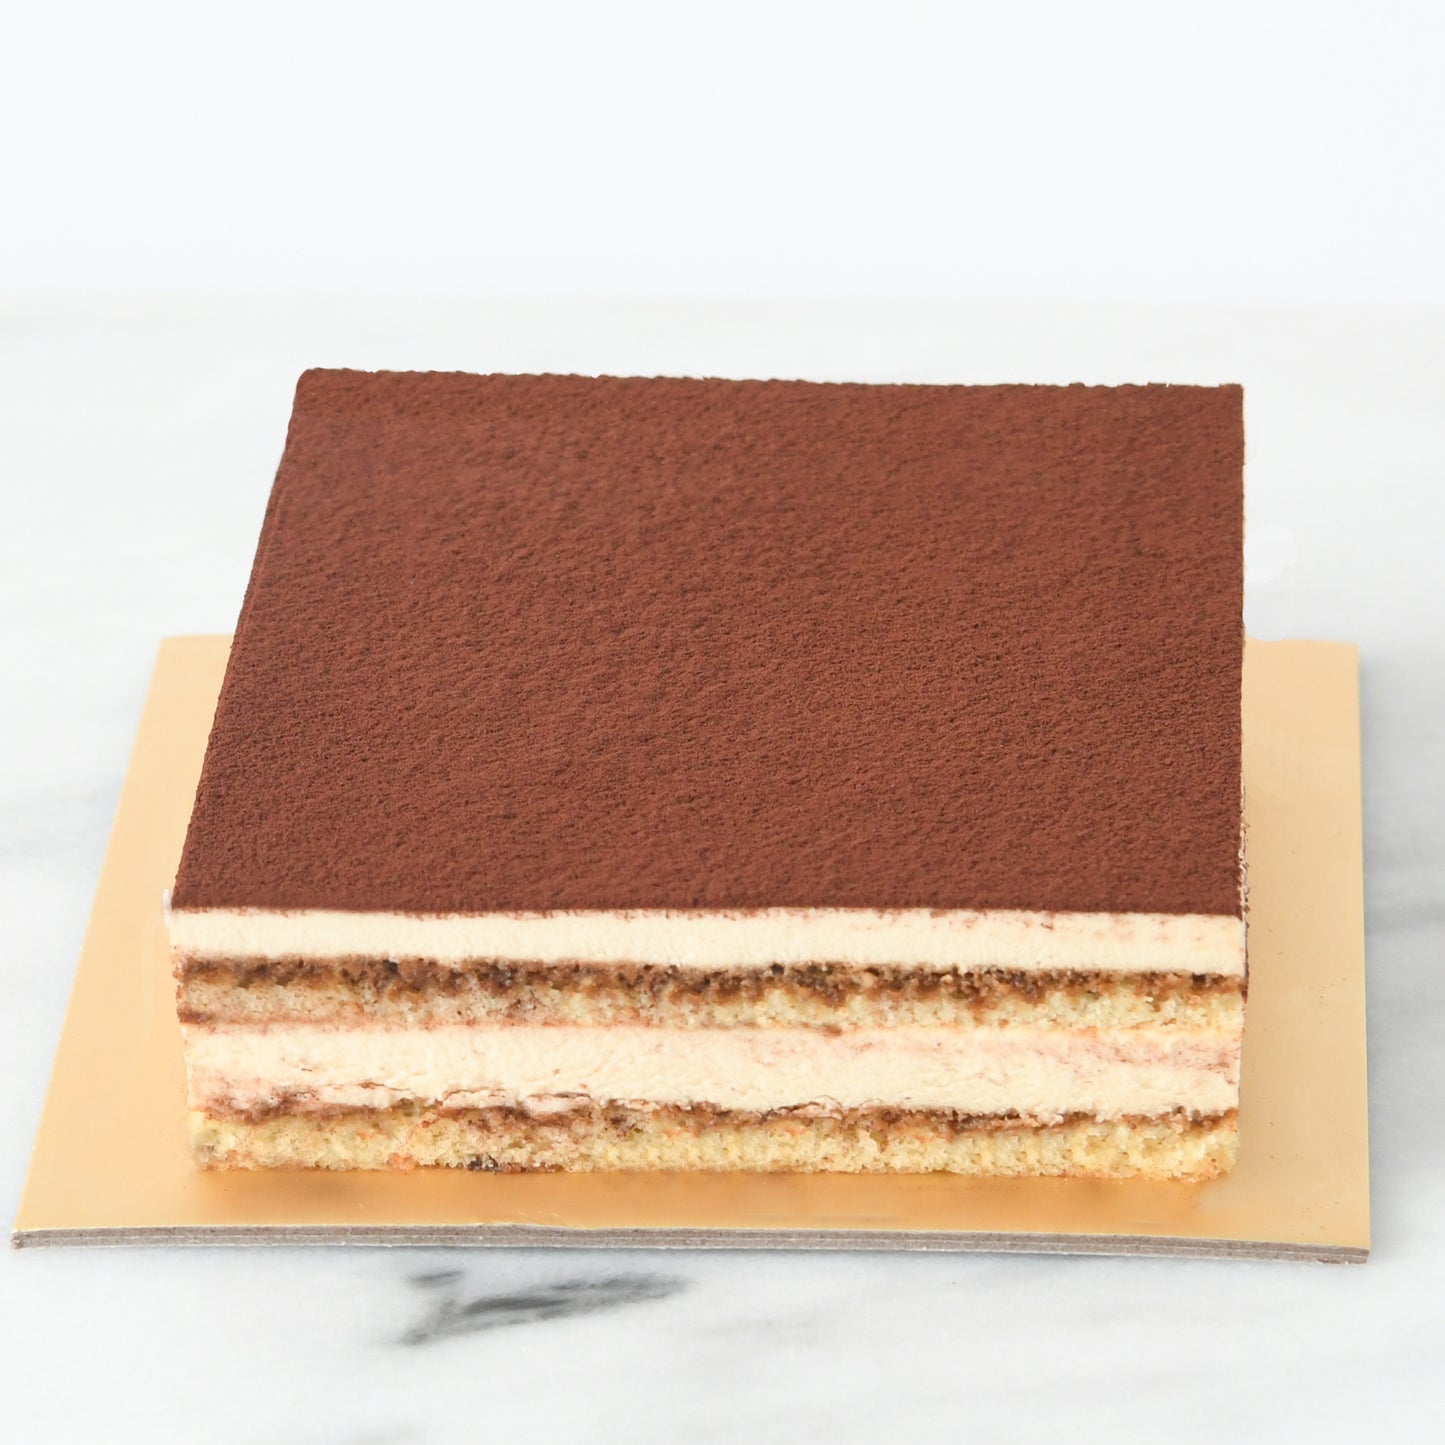 Sugar Free | Keto Friendly | Low Carb | Gluten free | Tiramisu 18x18 cm | $65.80 nett